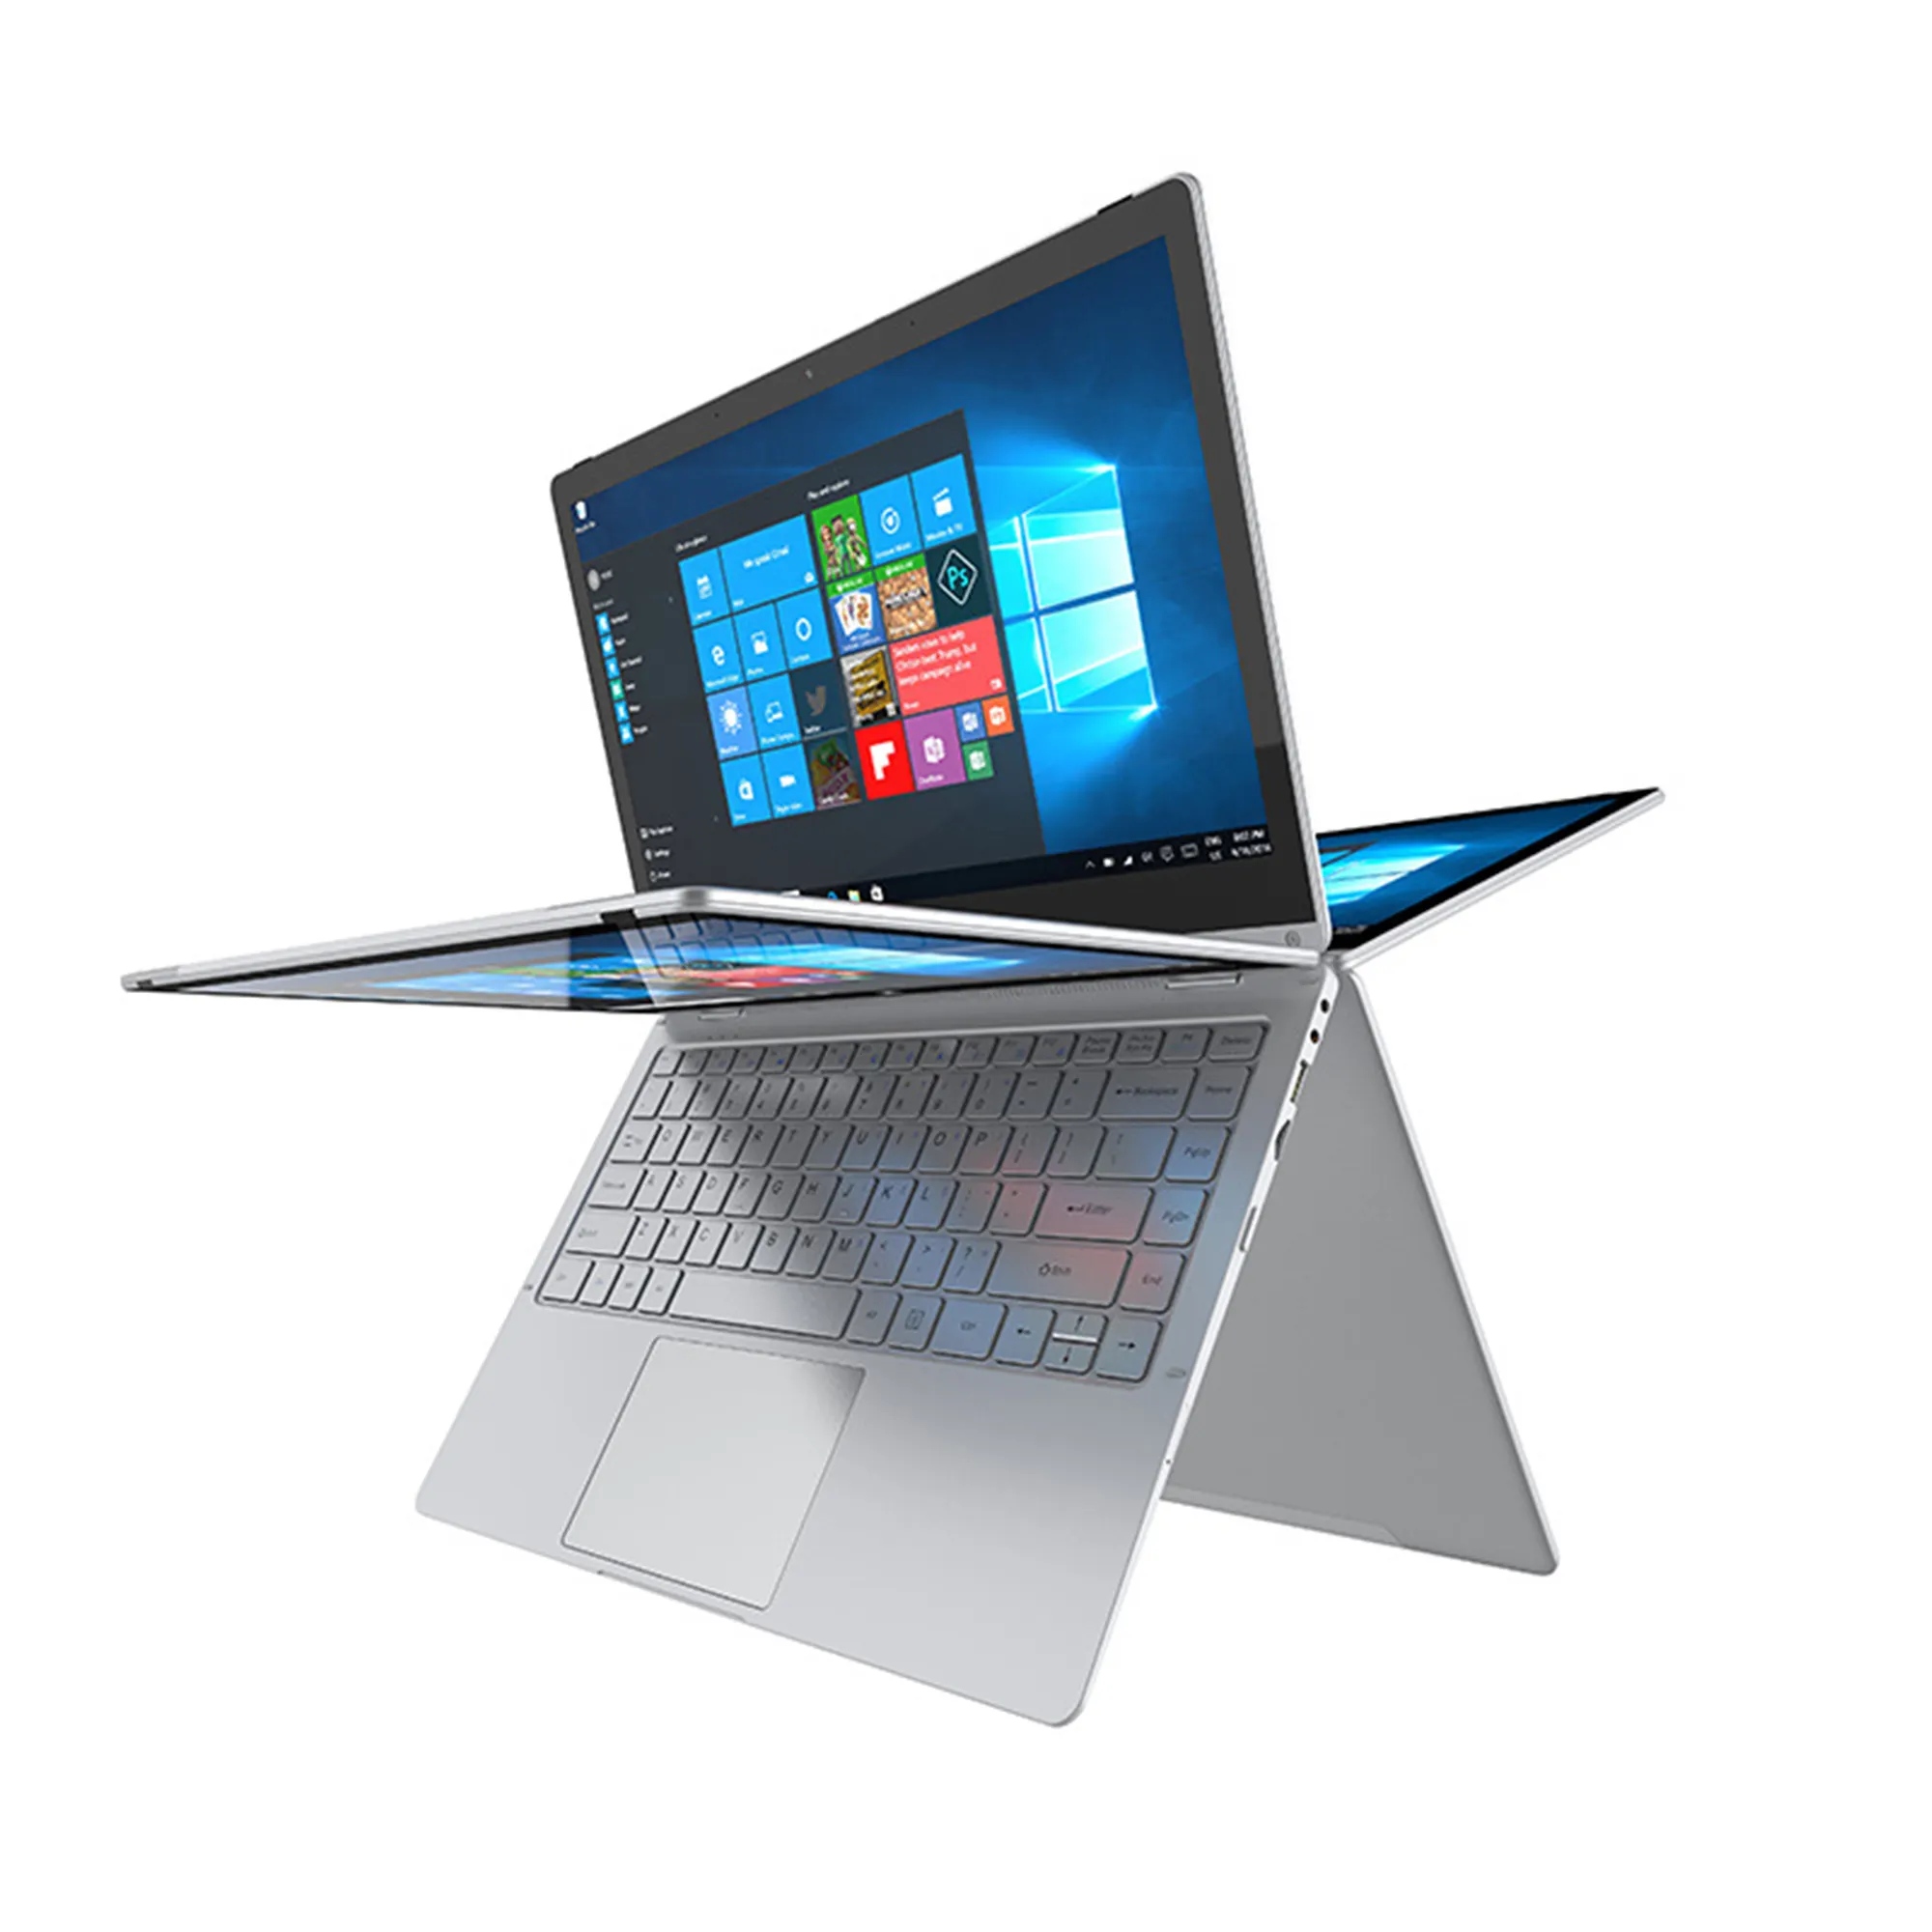 Bulk Wholesale Laptops Intel 14inch Best Price Notebook Laptop Windows10 Silver Laptop Computer